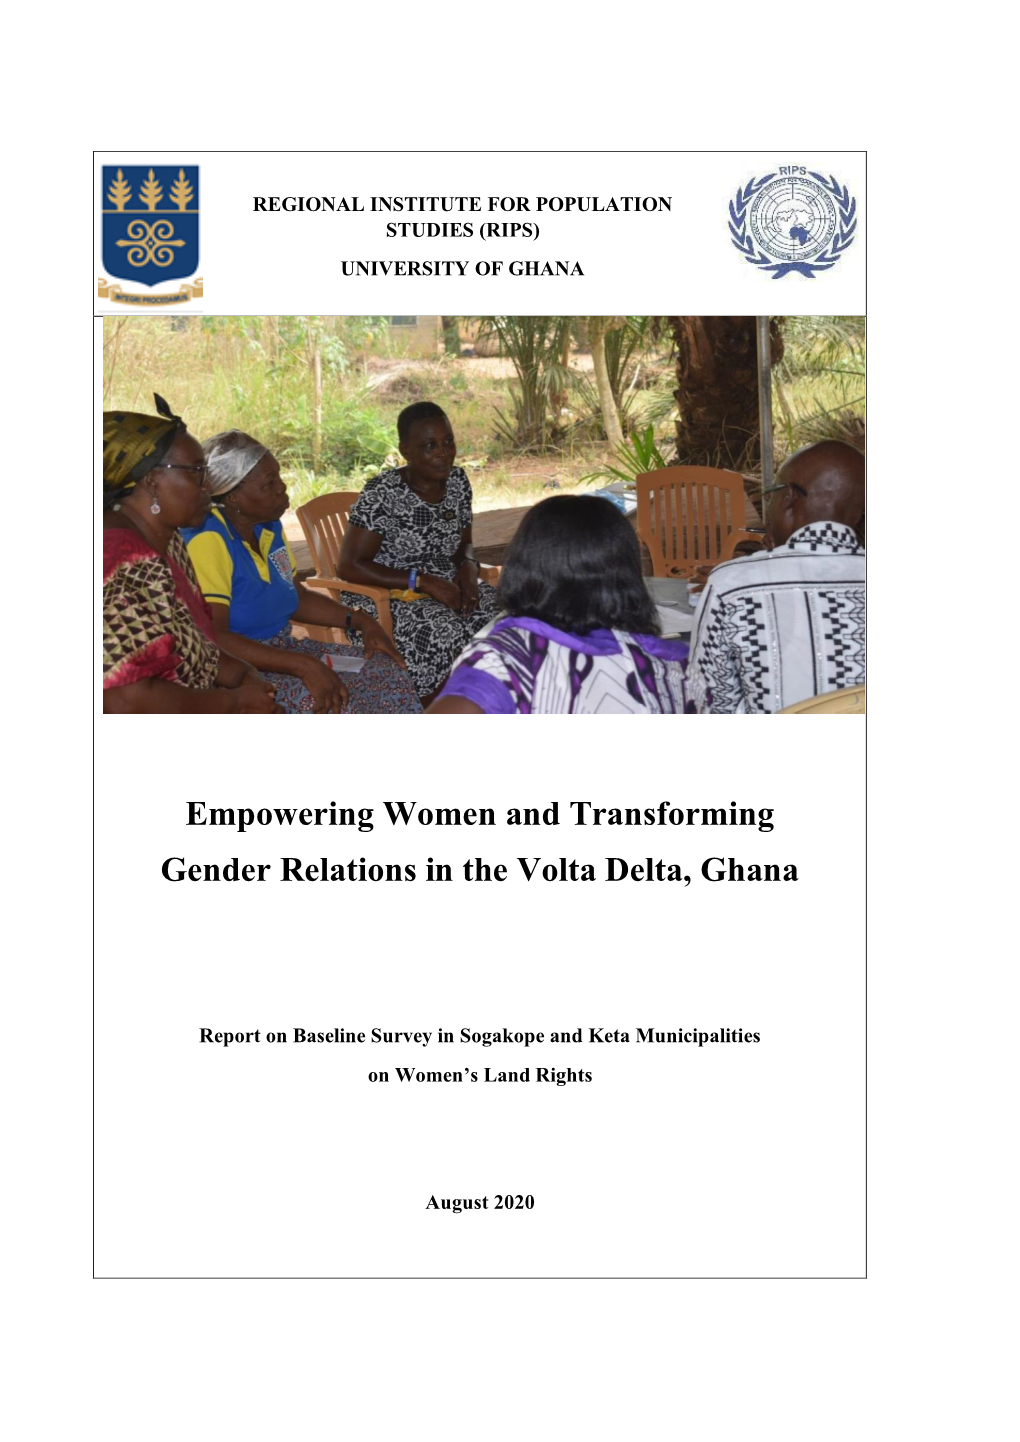 Baseline Survey on Women's Land Rights